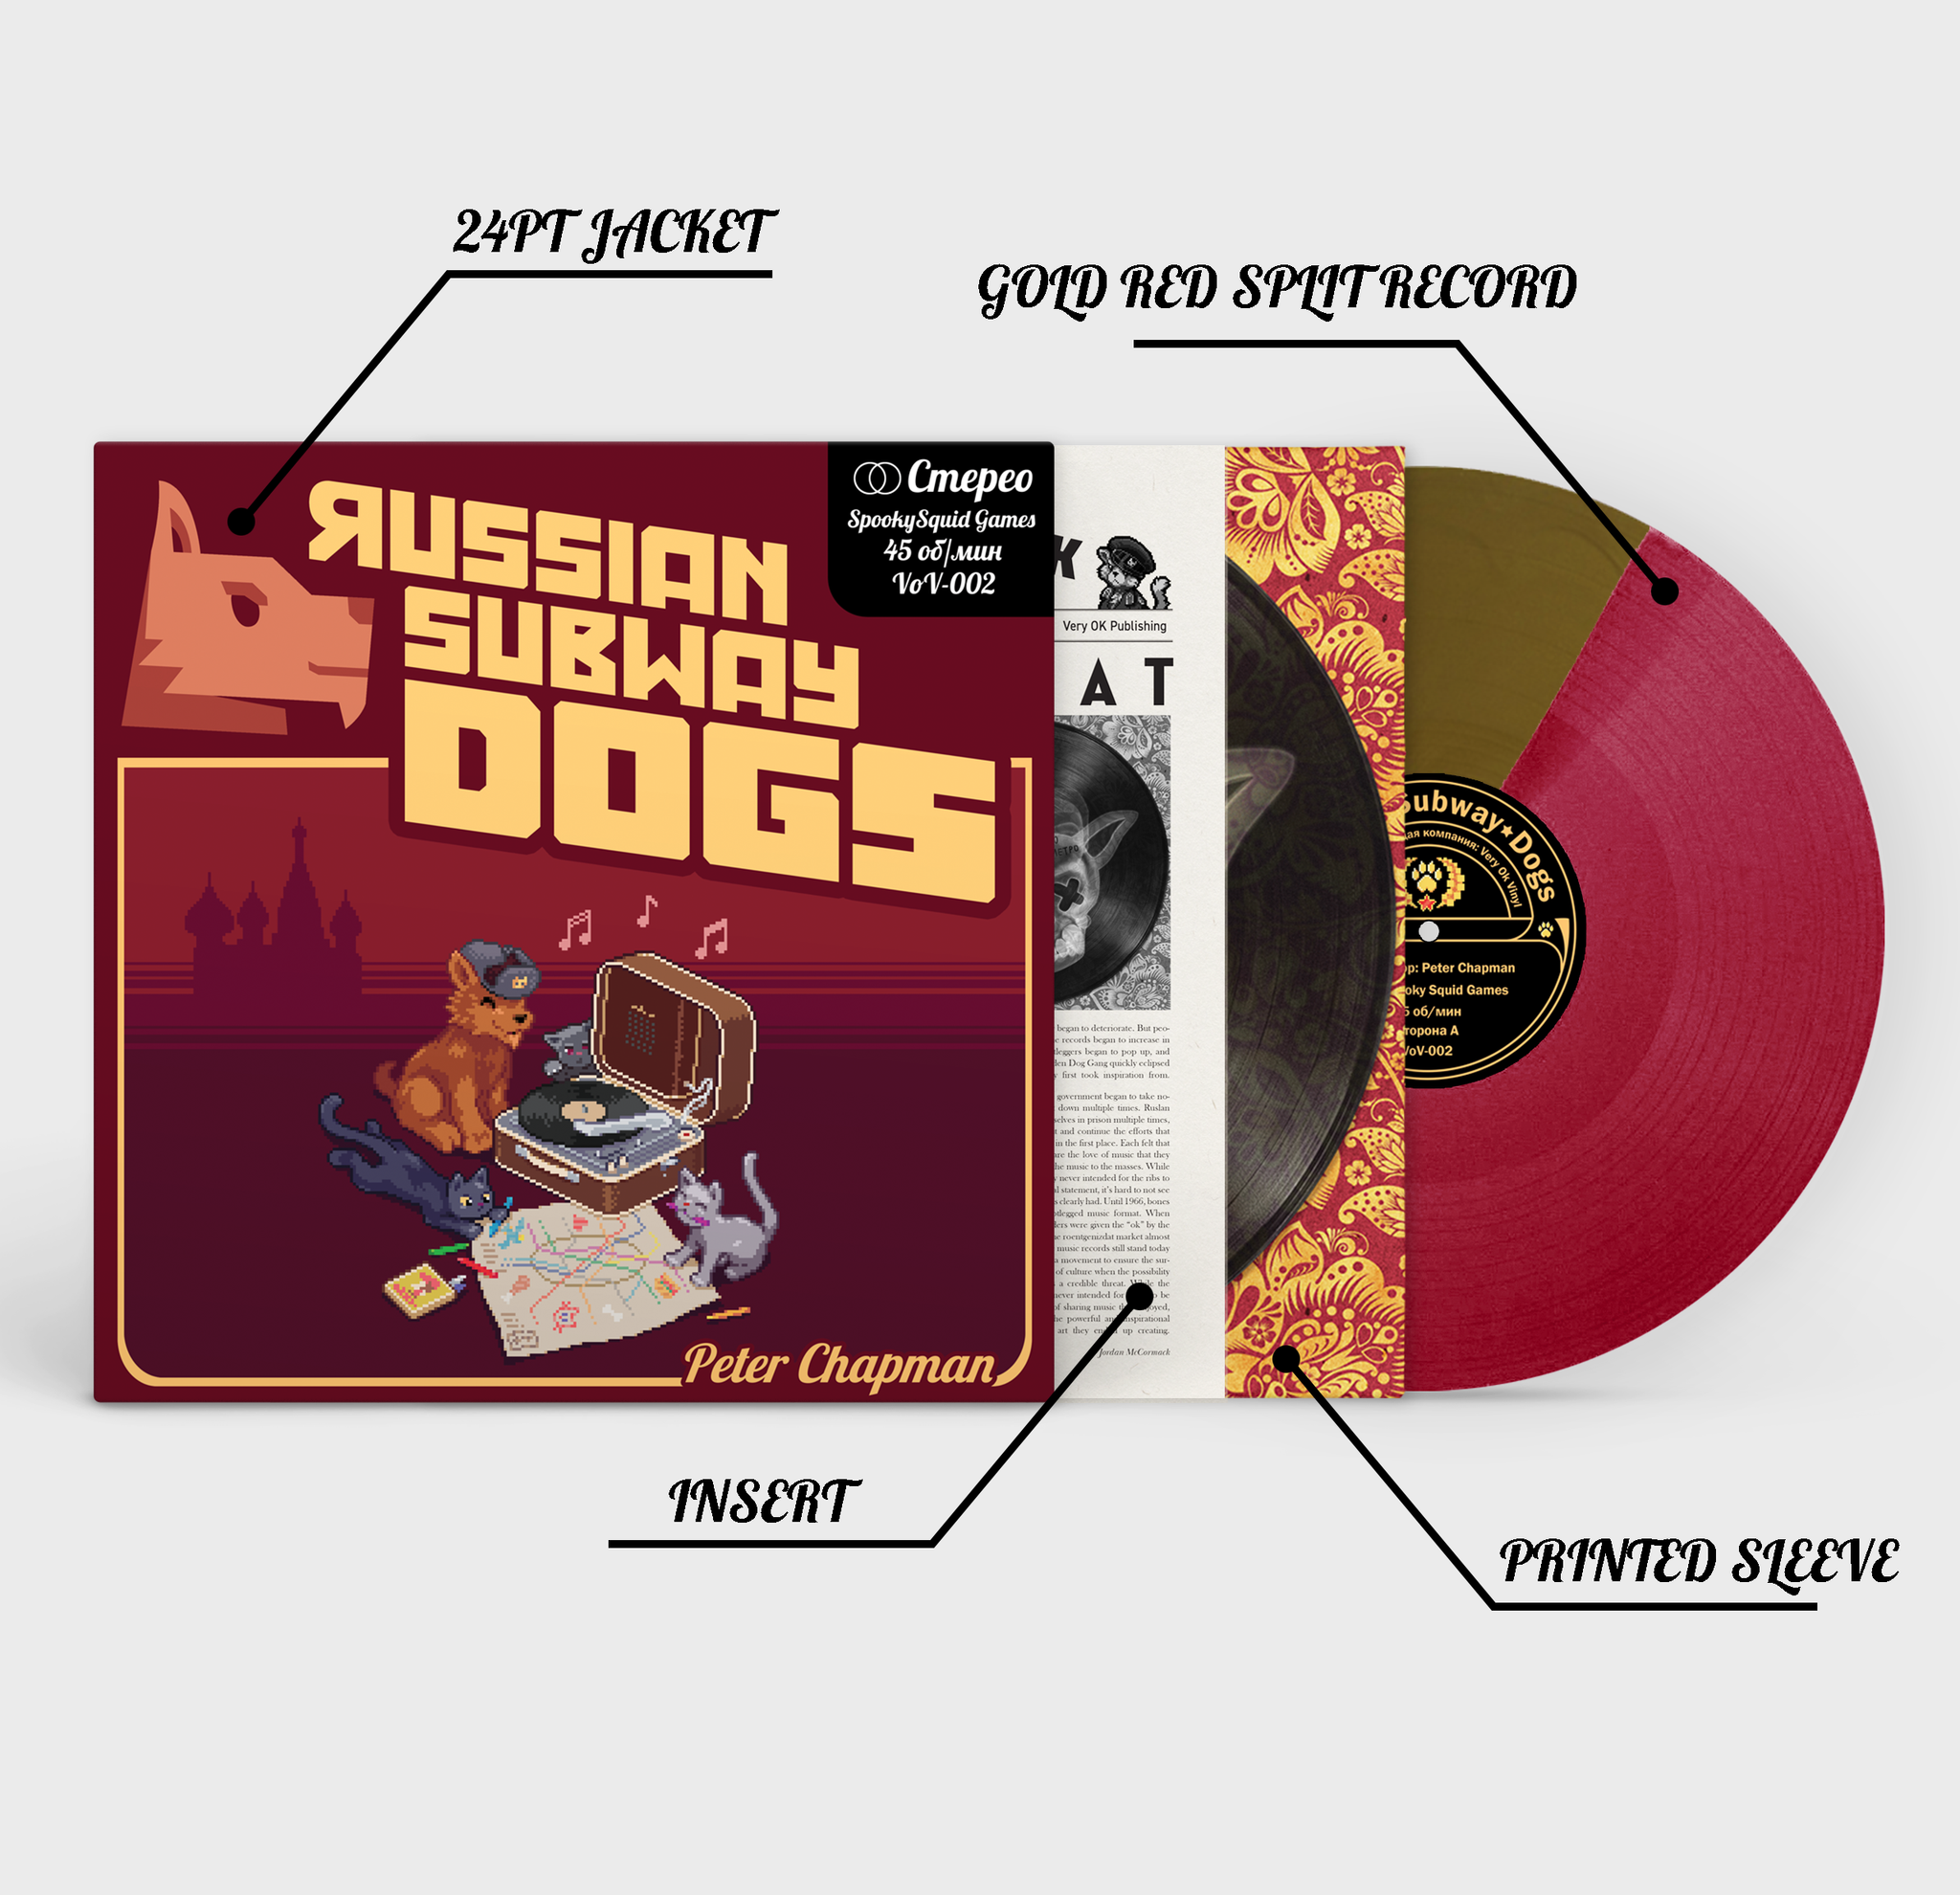 Russian Subway Dogs on vinyl